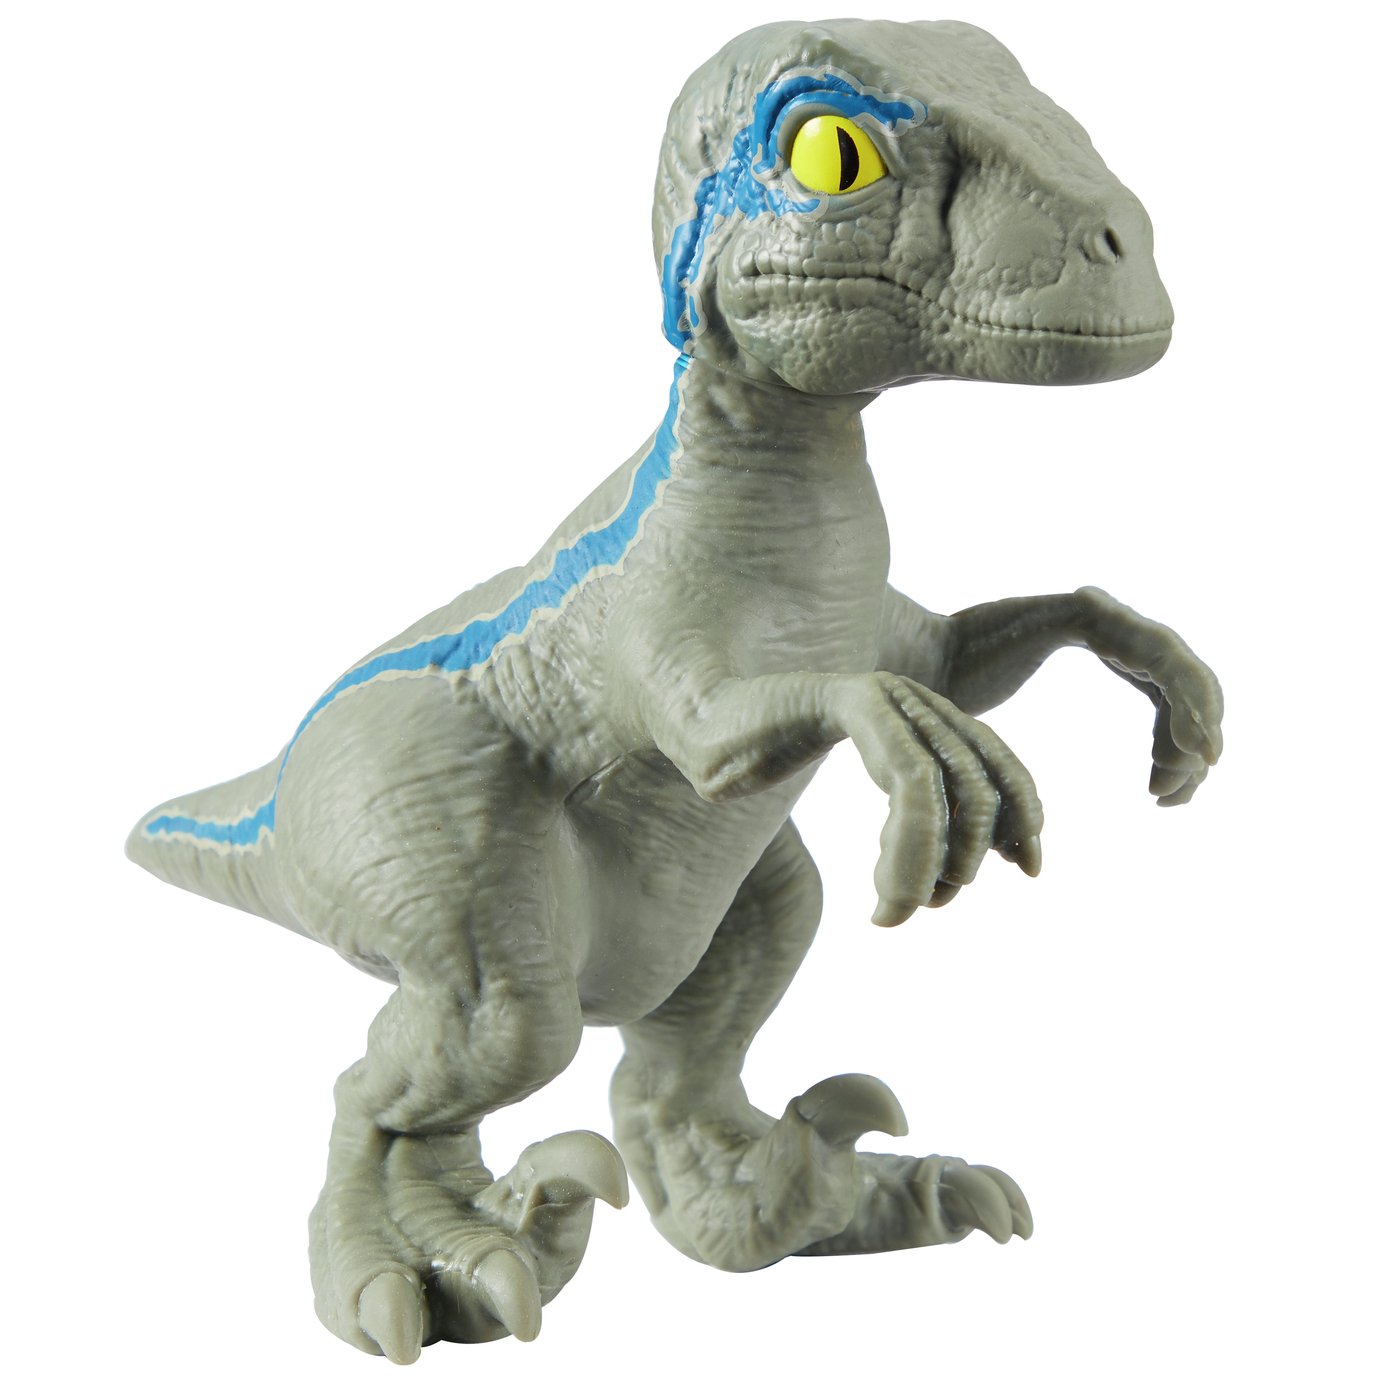 Jurassic World Toys Argos Promotions